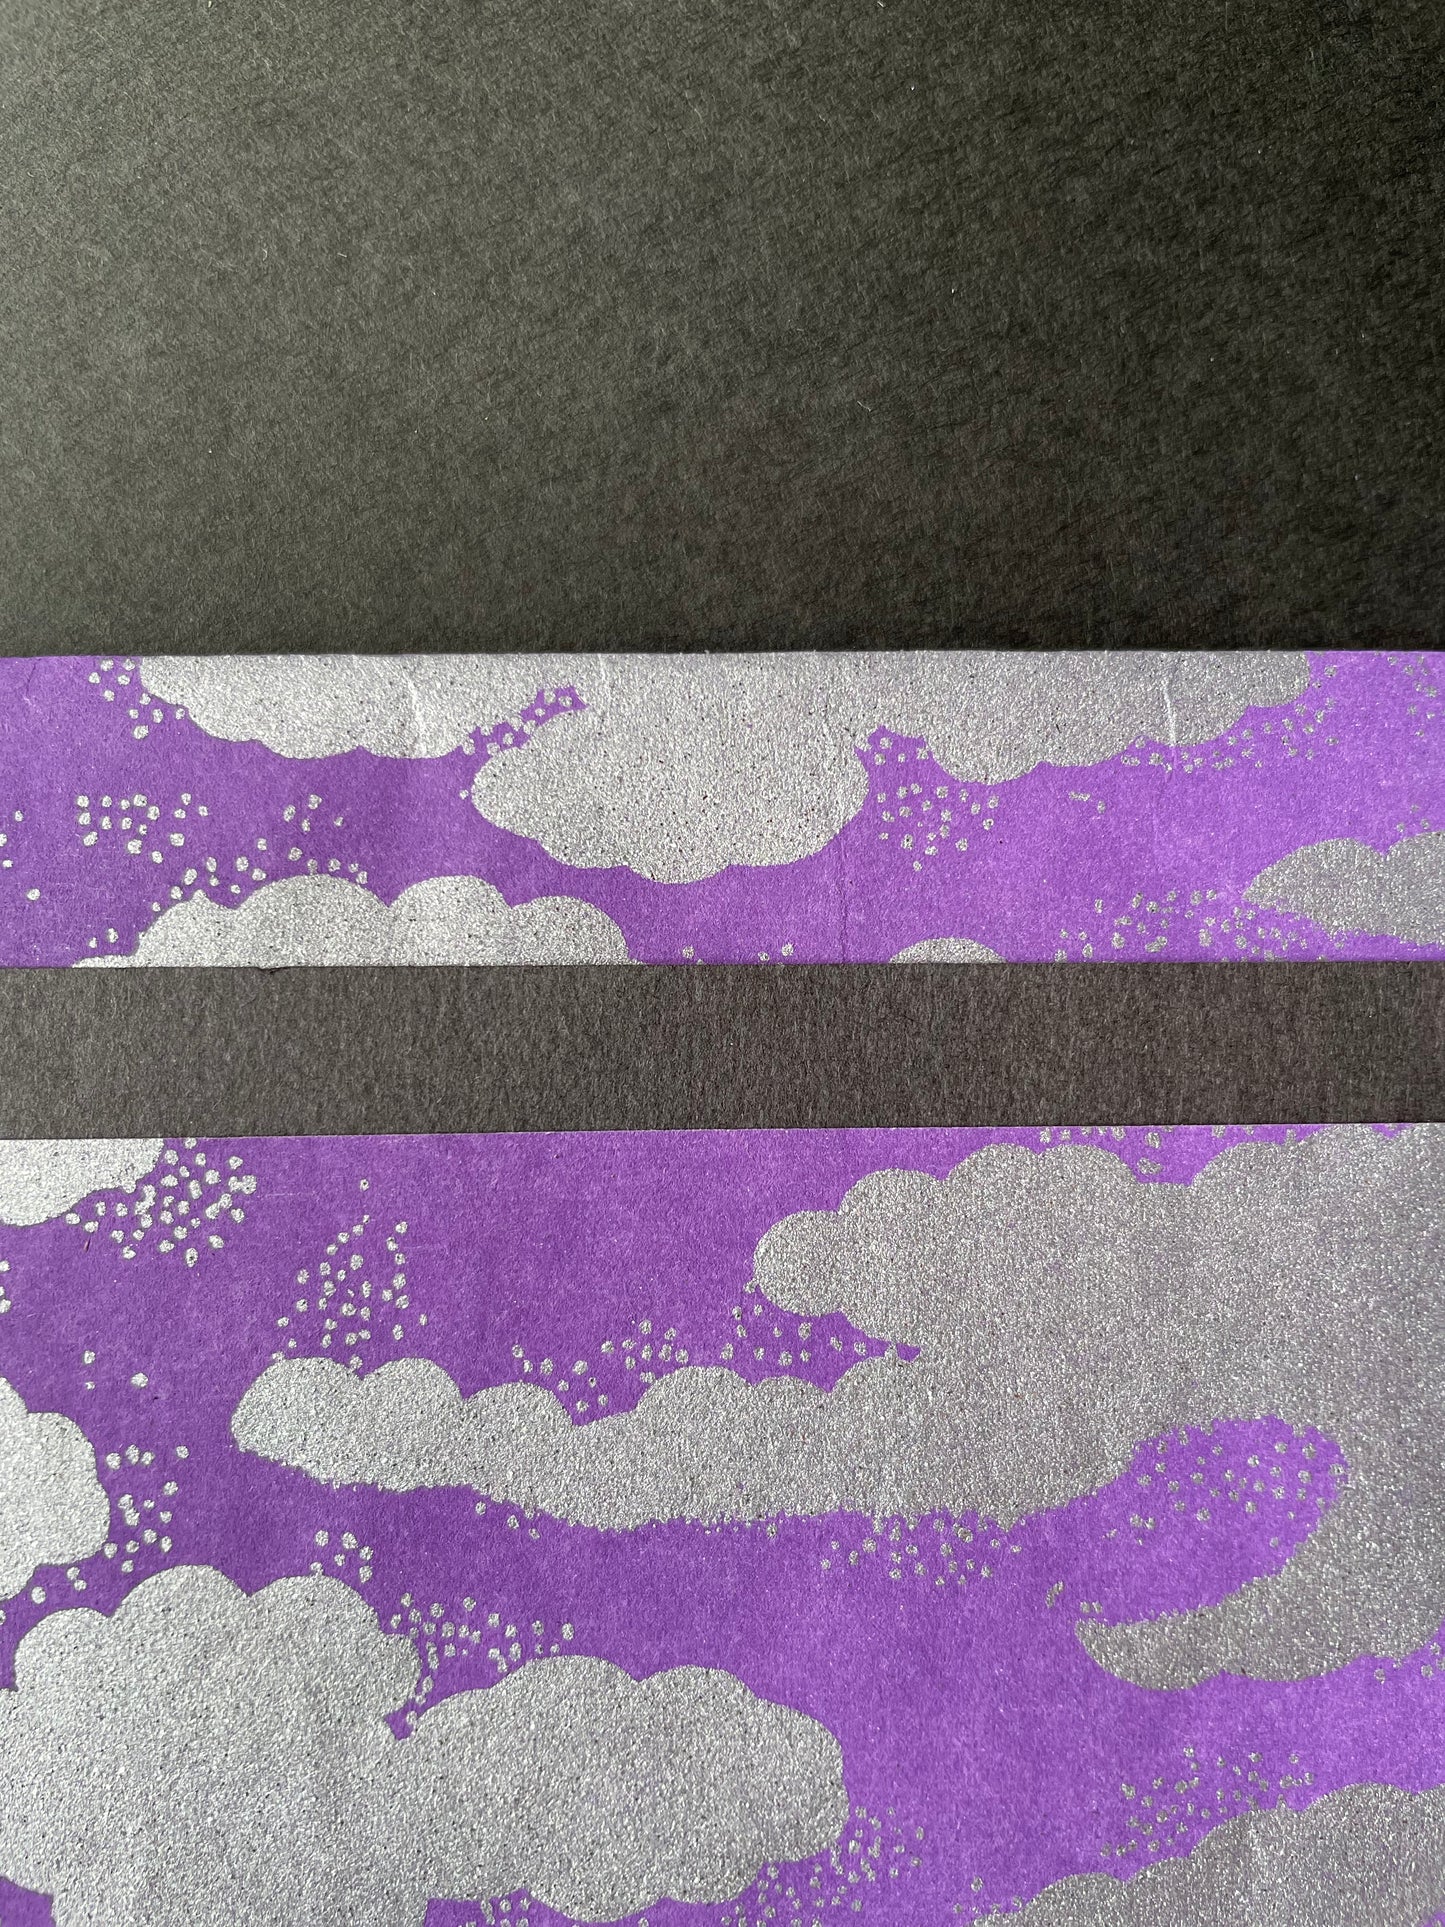 Okurifumi (10) clouds, purple, stripes